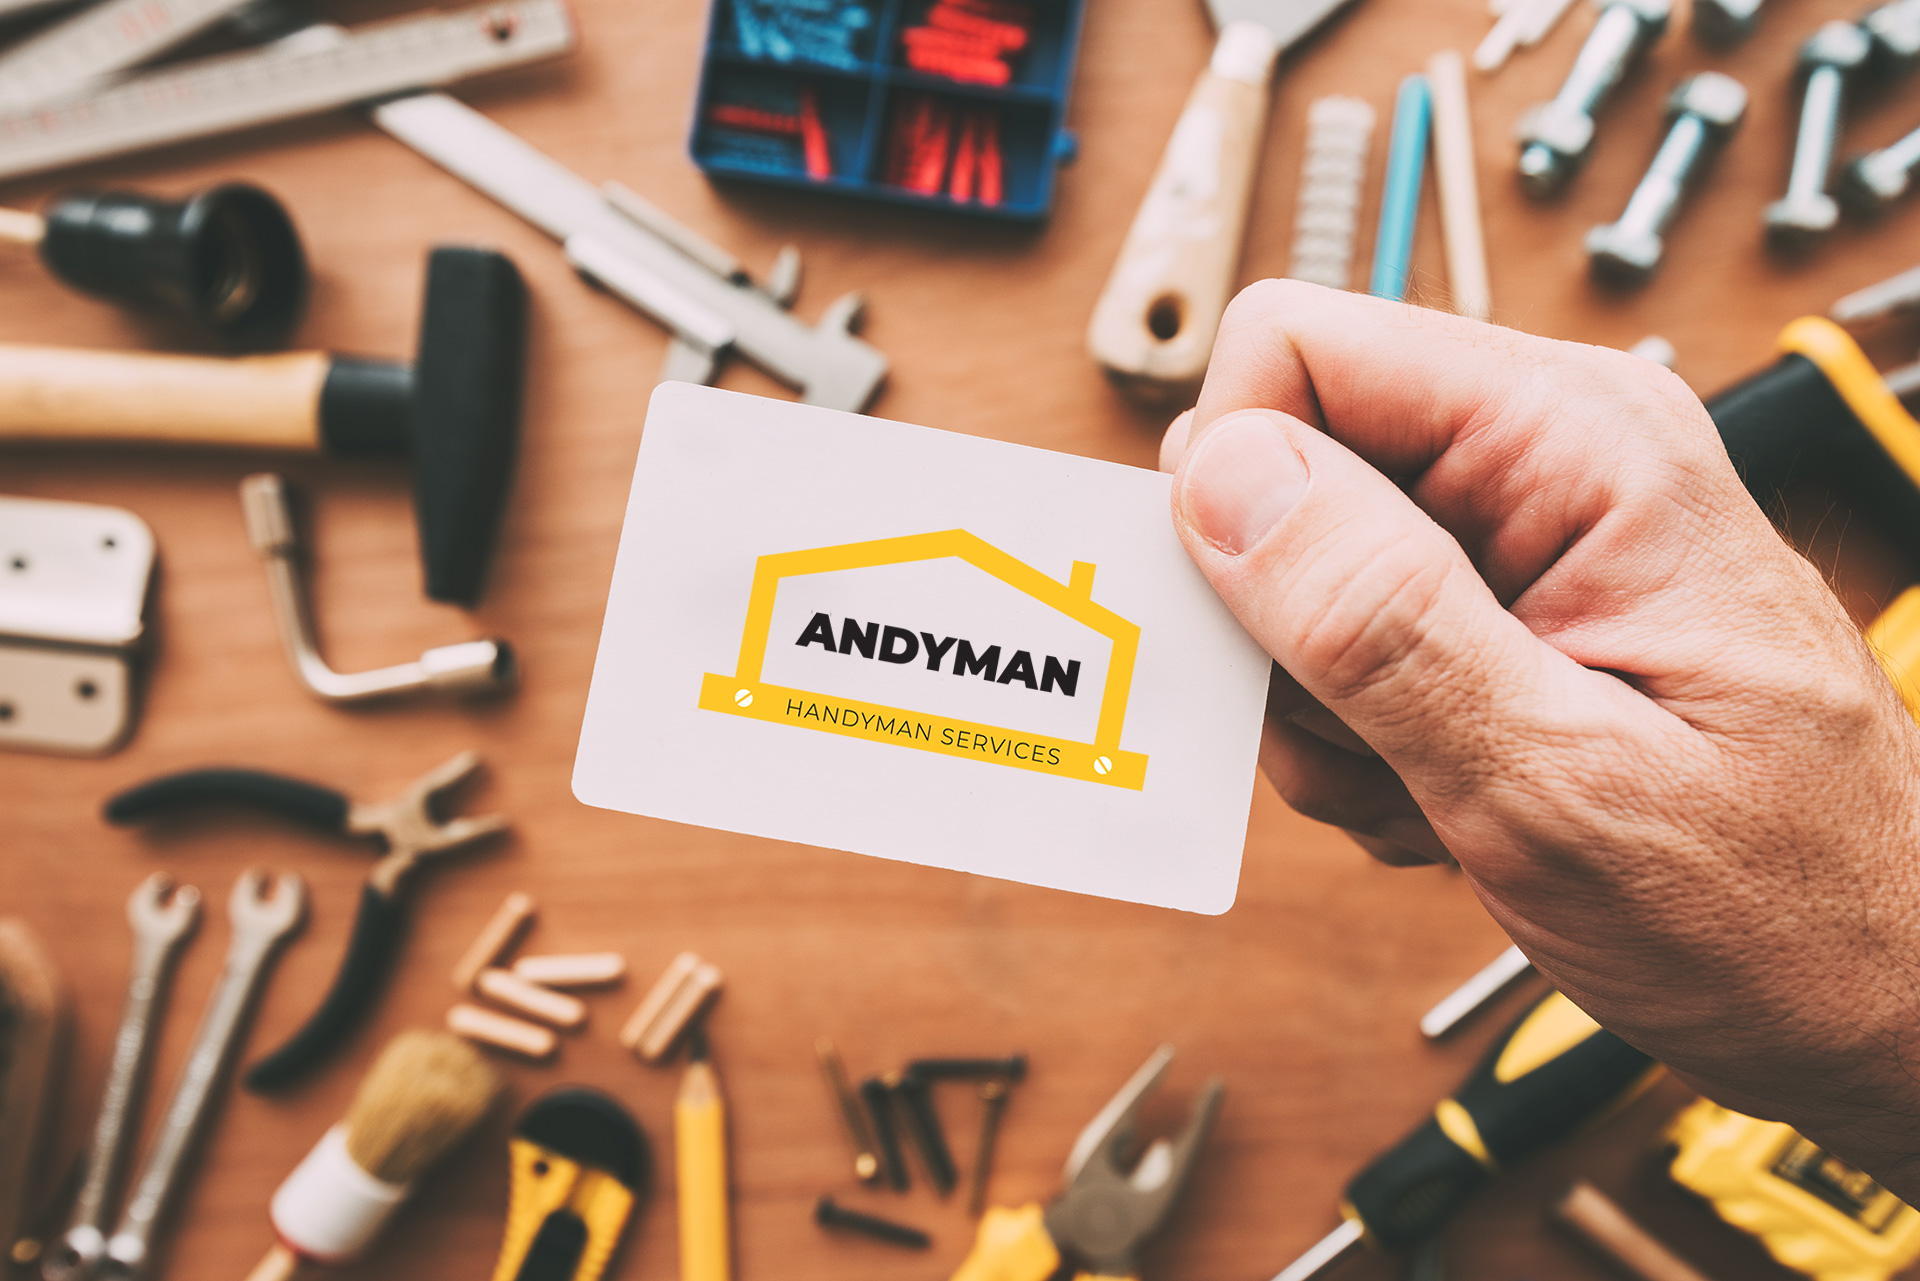 Andyman - Handyman Services